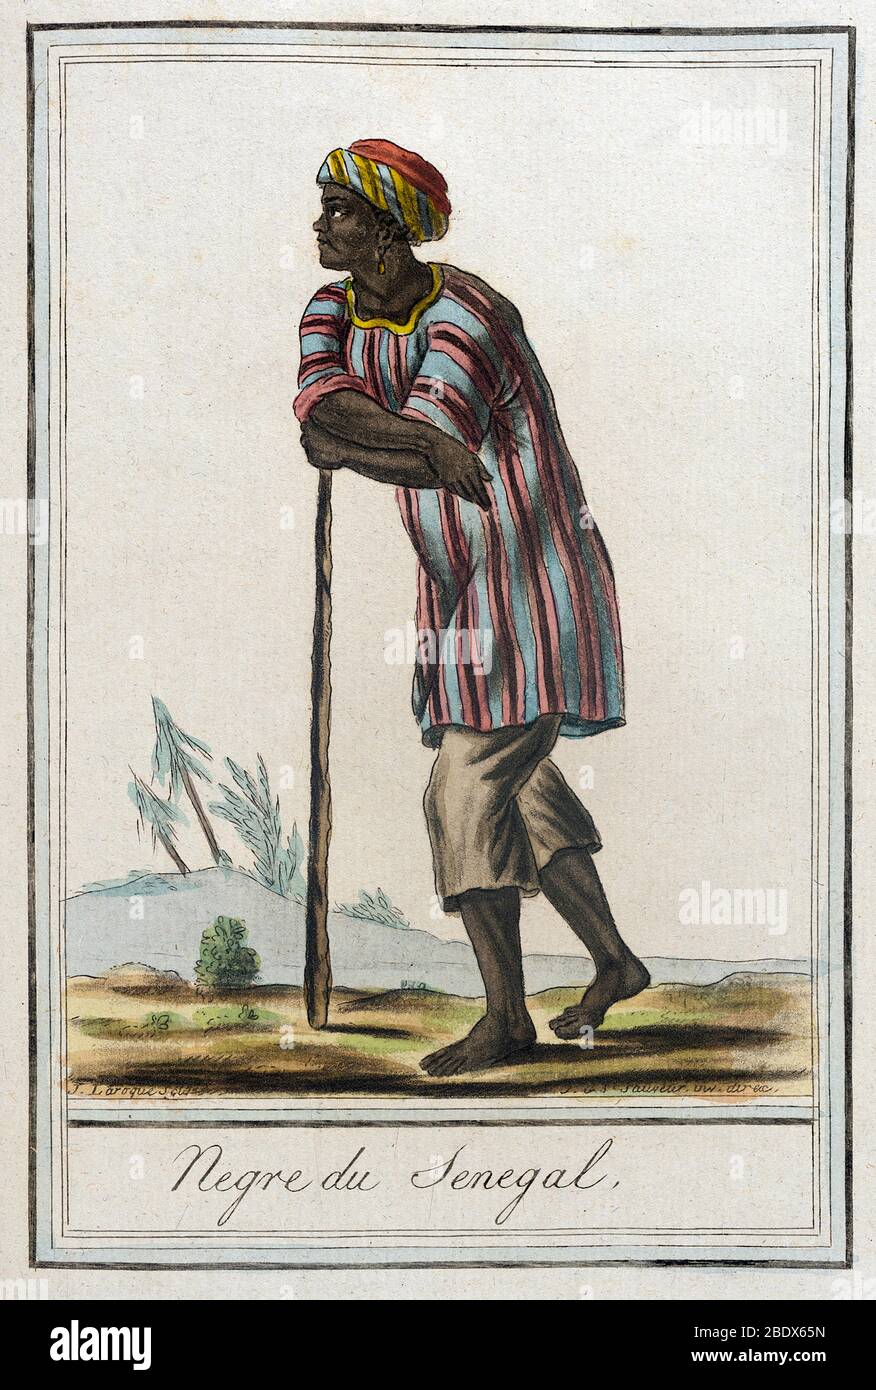 Africa Occidentale, uomo del Senegal, 1797 Foto Stock